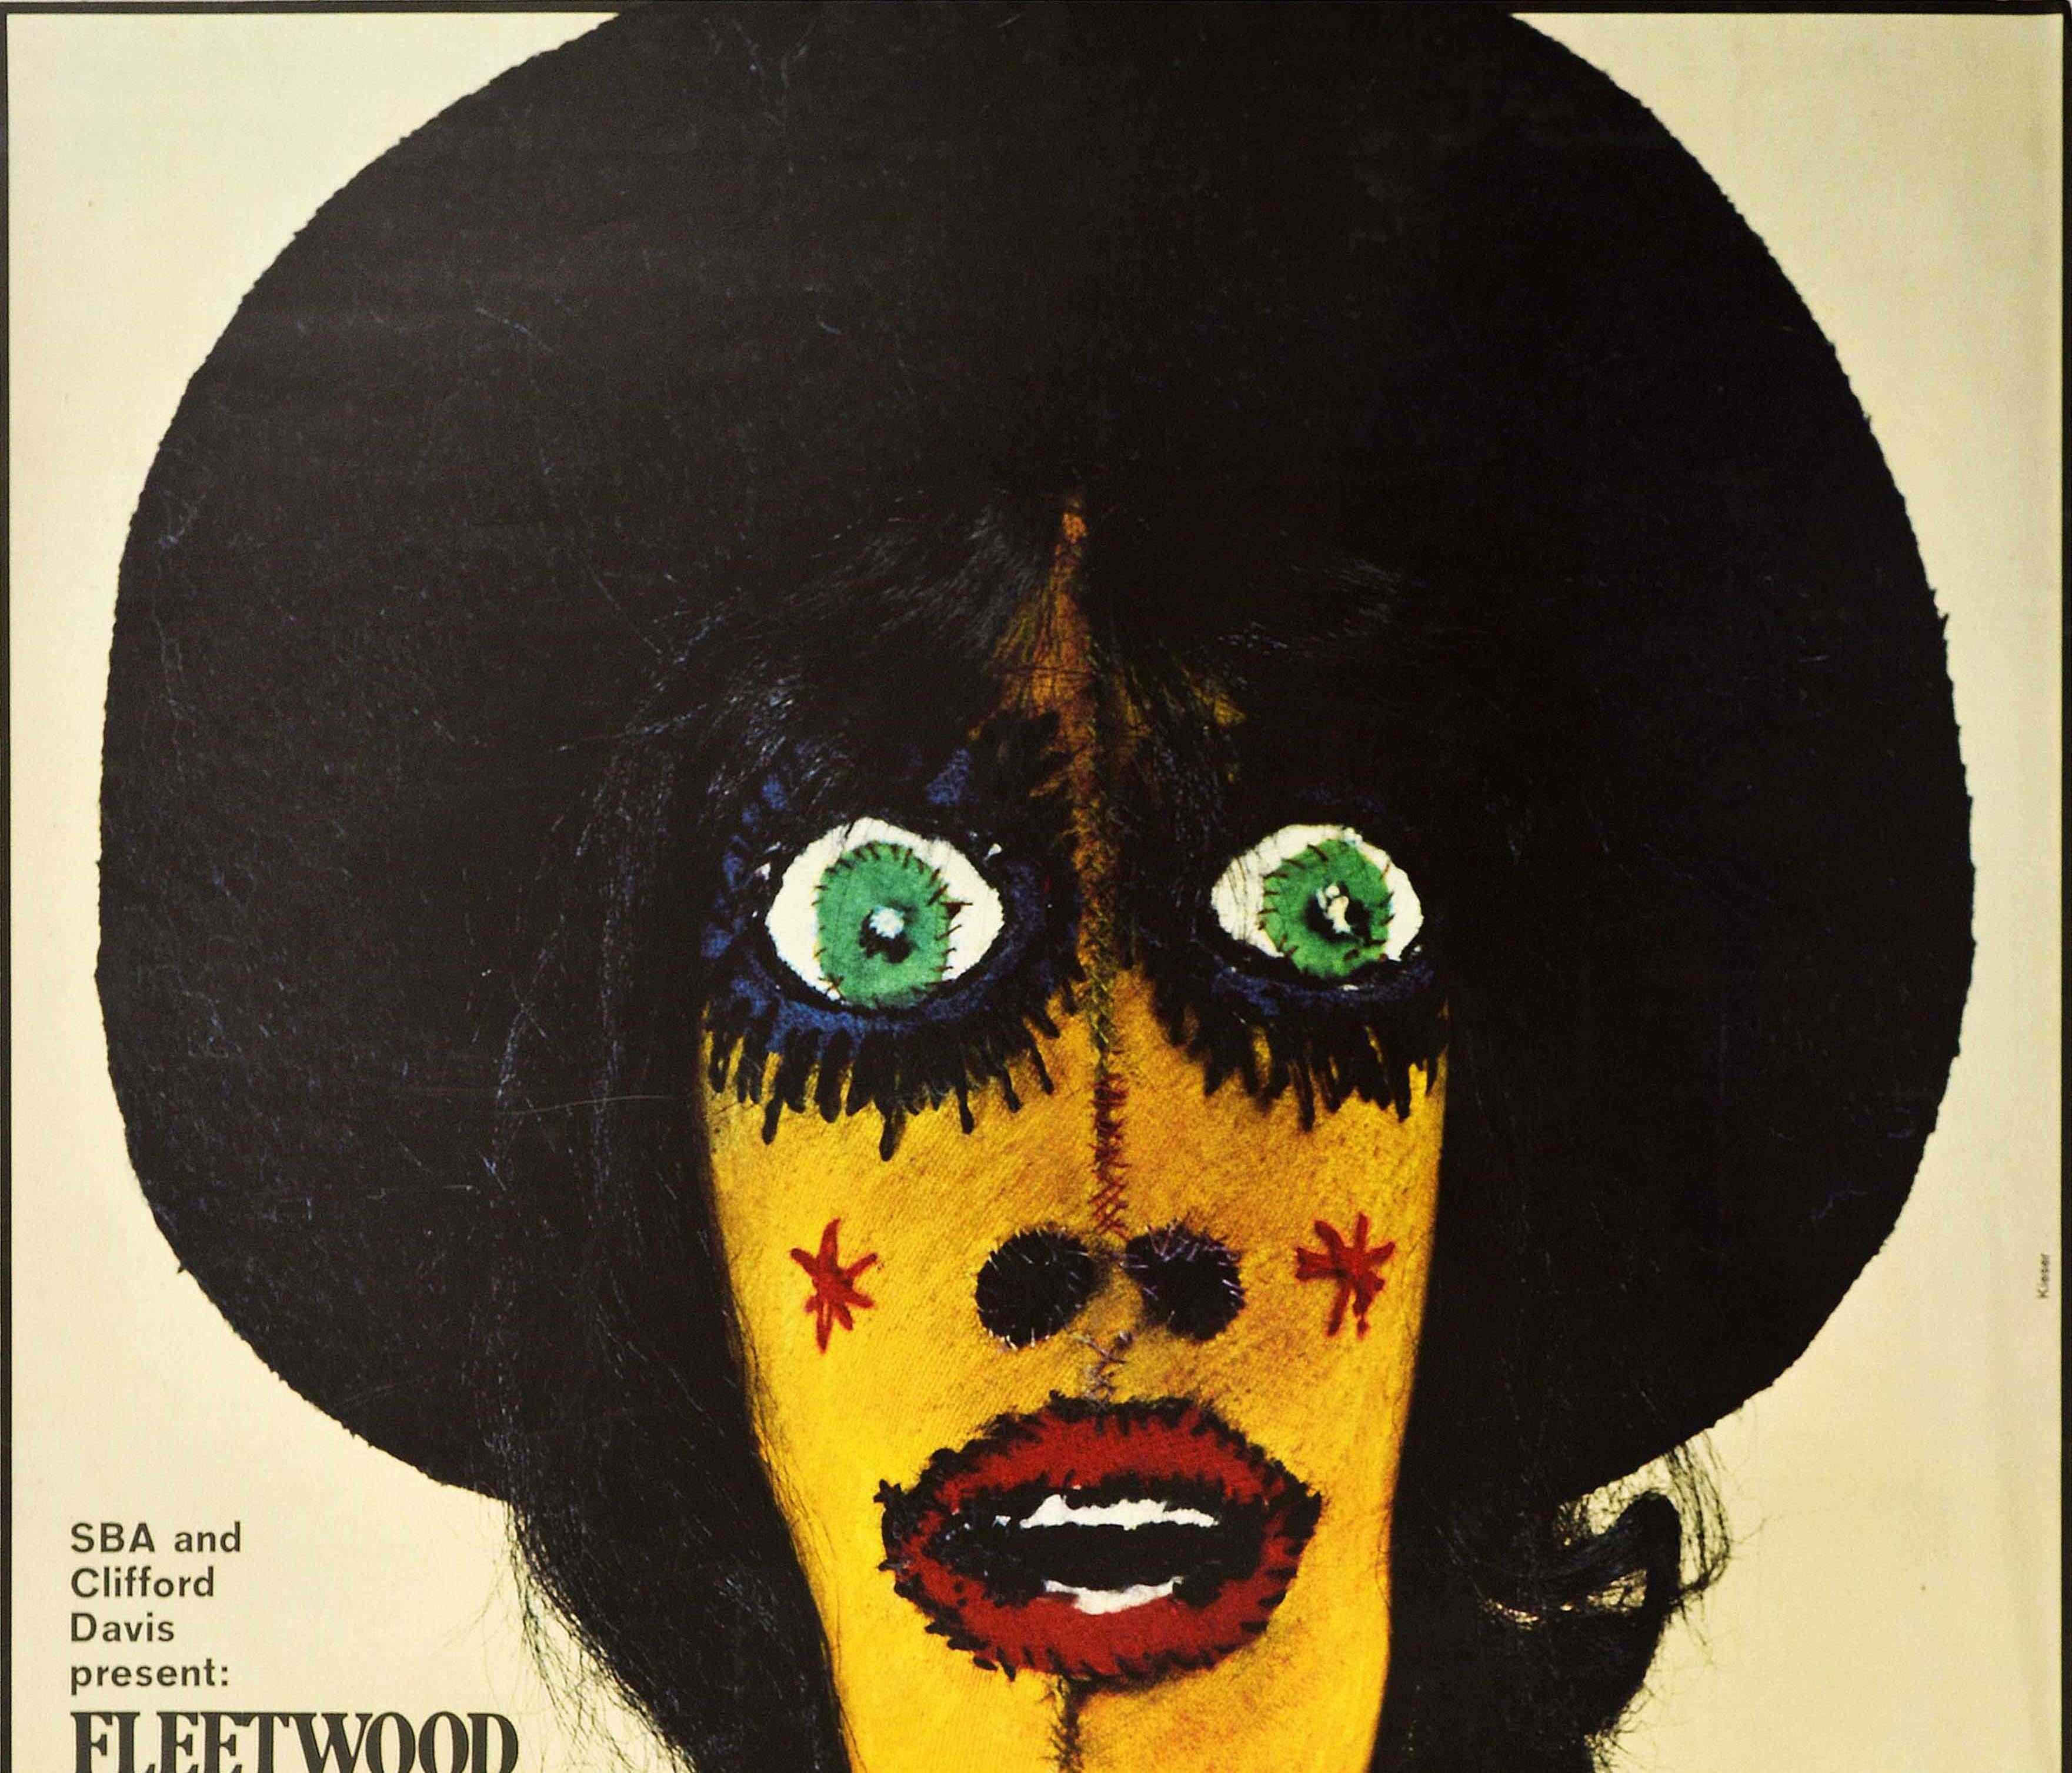 Original Vintage Music Poster For Fleetwood Mac In Concert Patchwork Doll Design - Print by Günther Kieser